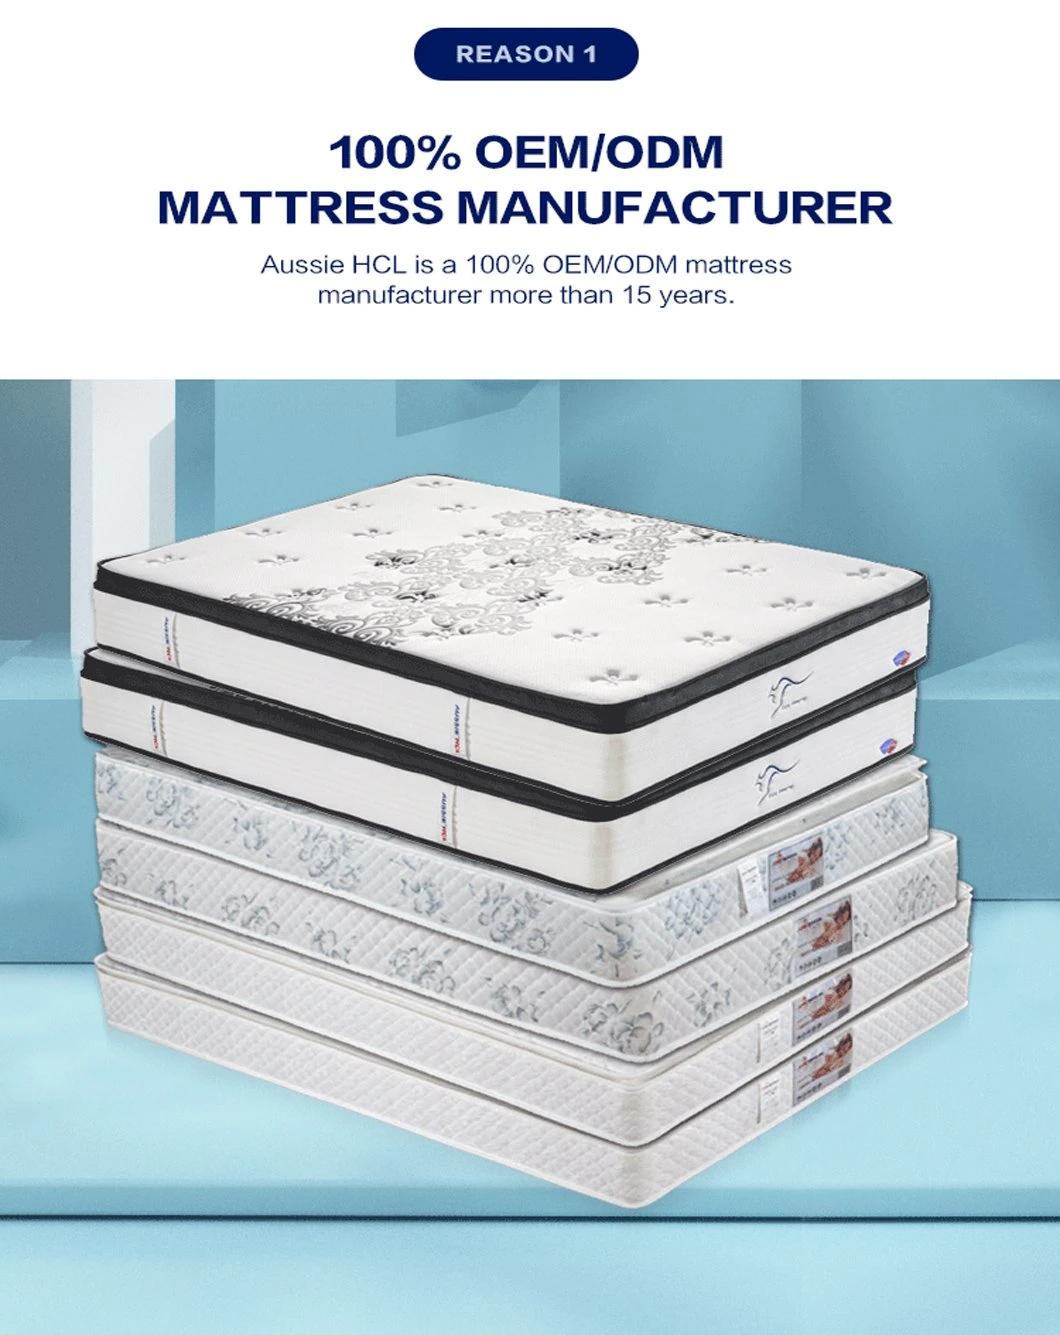 Quality Sleep Well Single Double Full King Korea Mattresses Bed Royal Luxury High Density Swirl Gel Memory Rebonded Foam Mattress